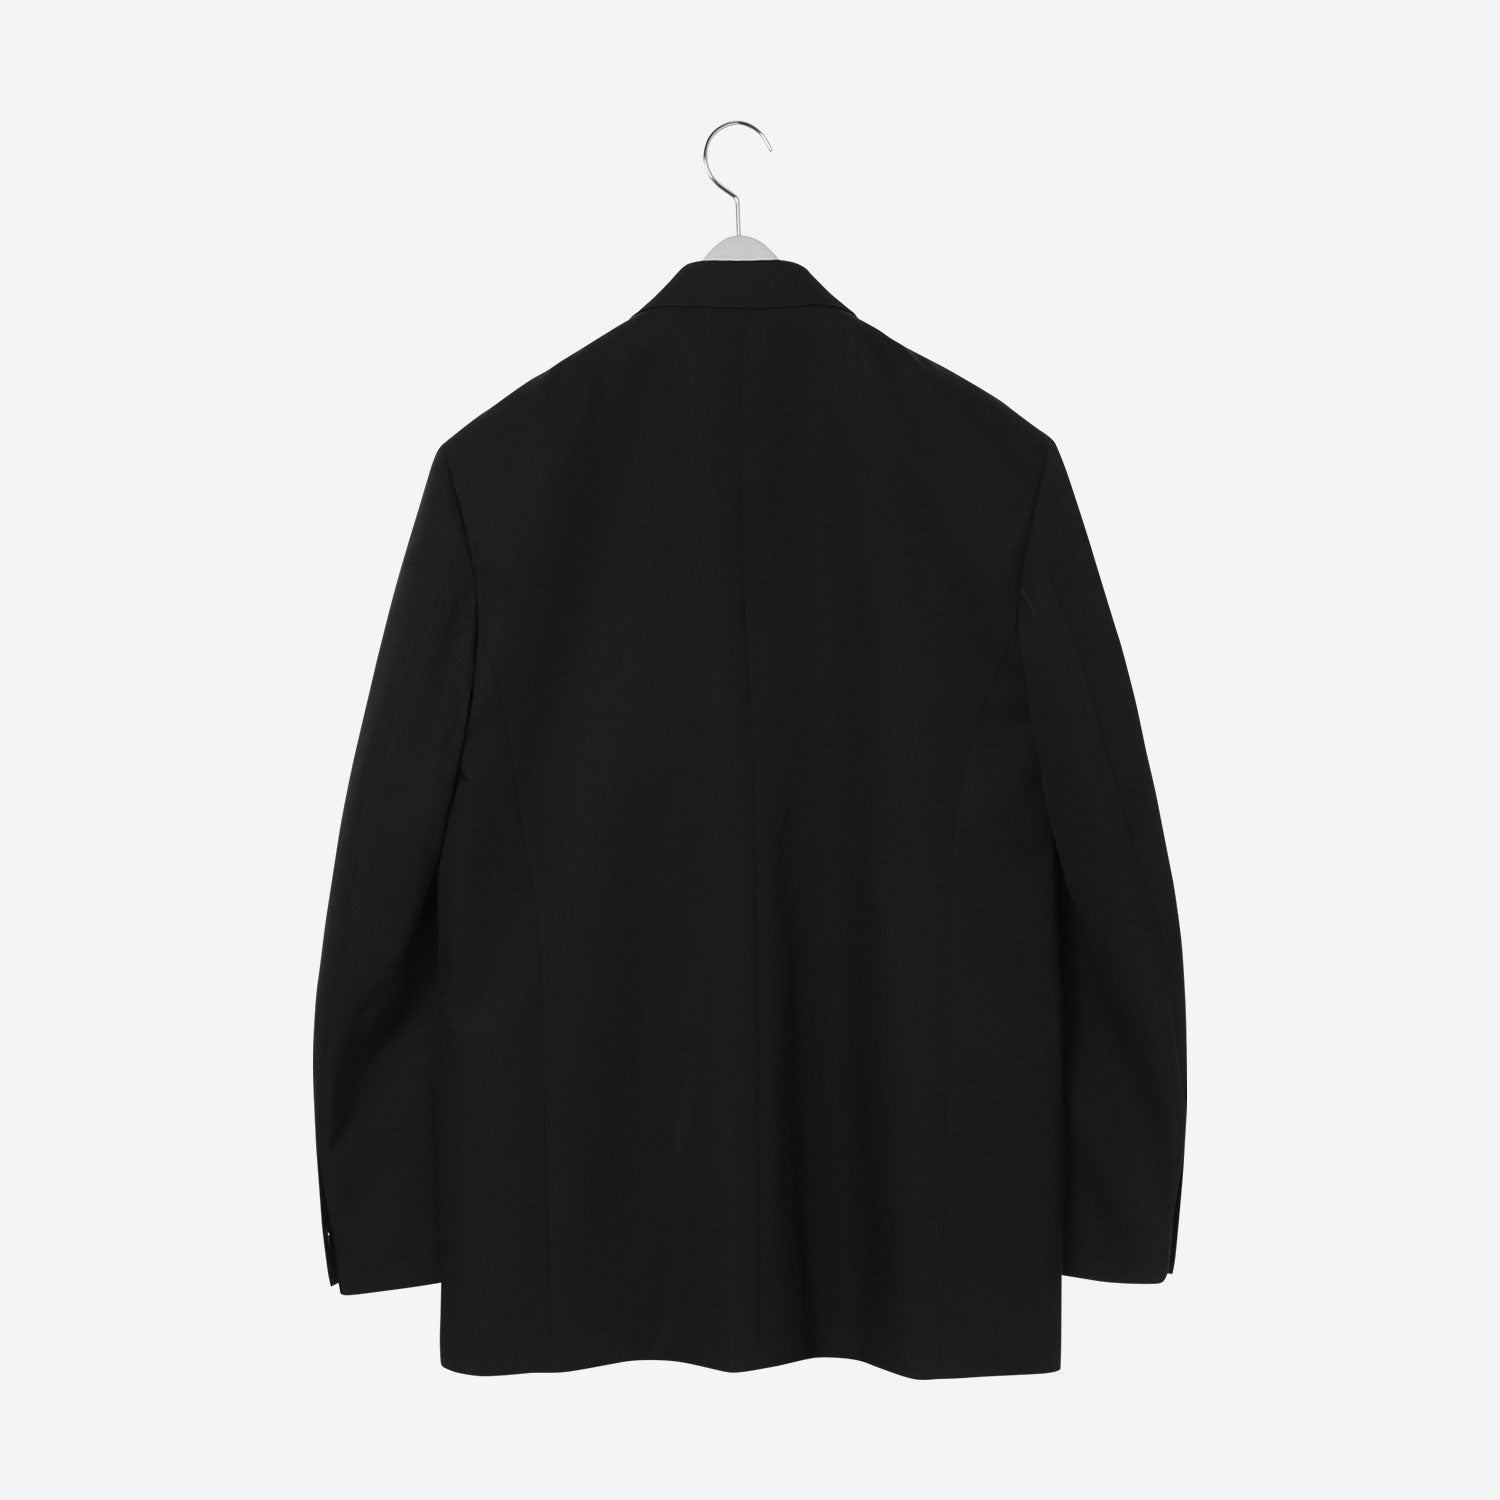 Single Jacket / black